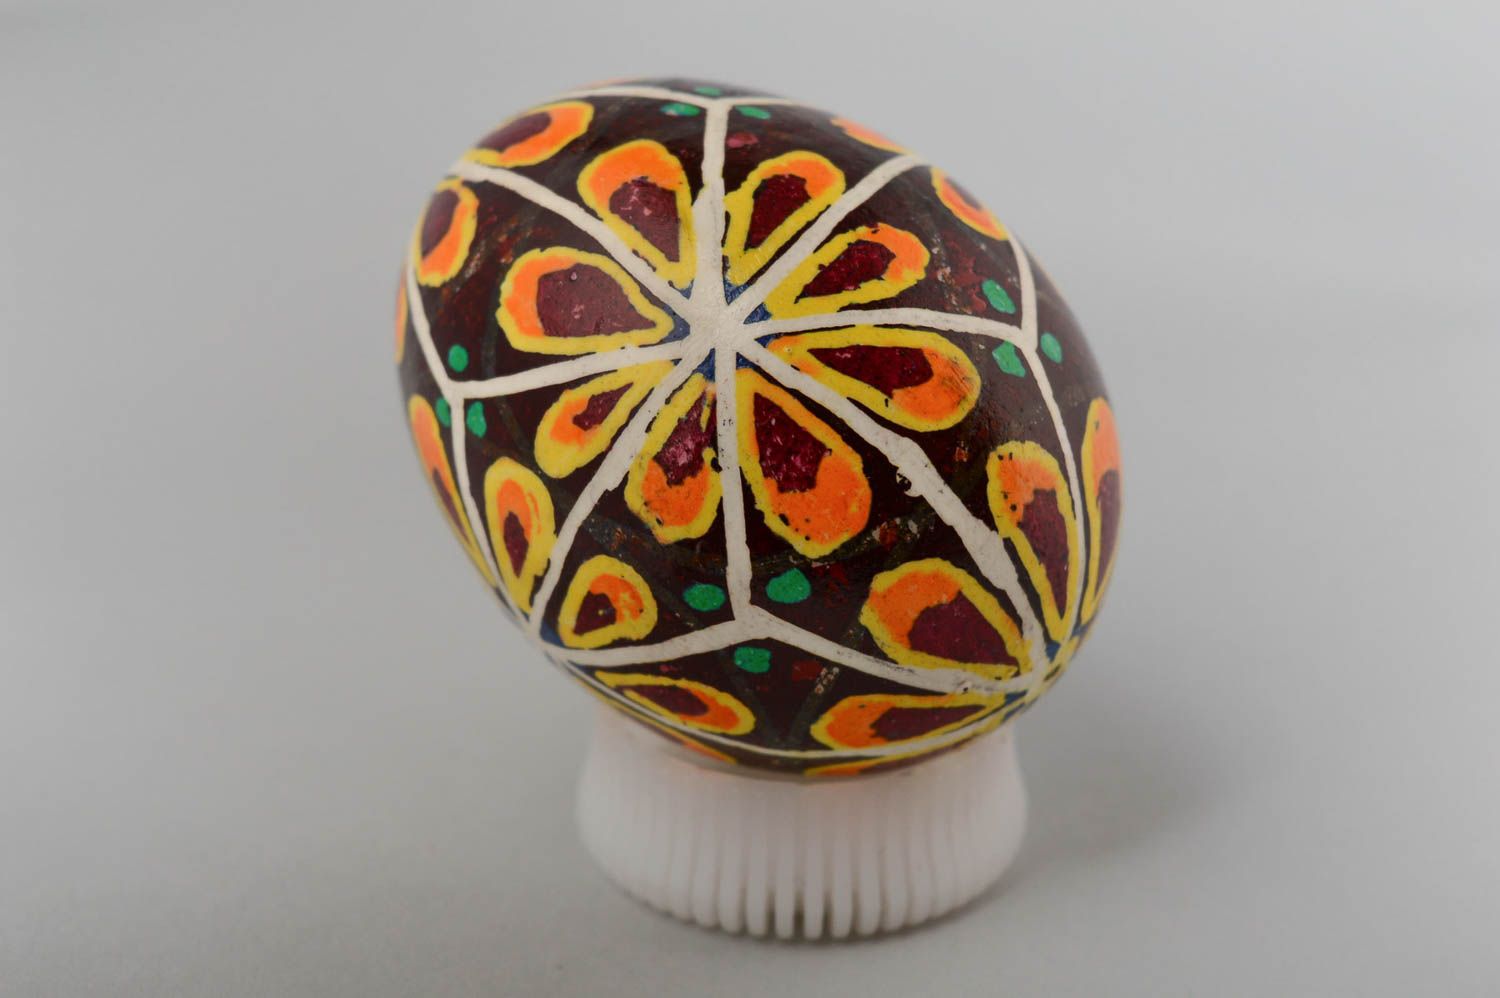 Unusual handmade decorative Easter egg living room designs Easter gift ideas photo 2